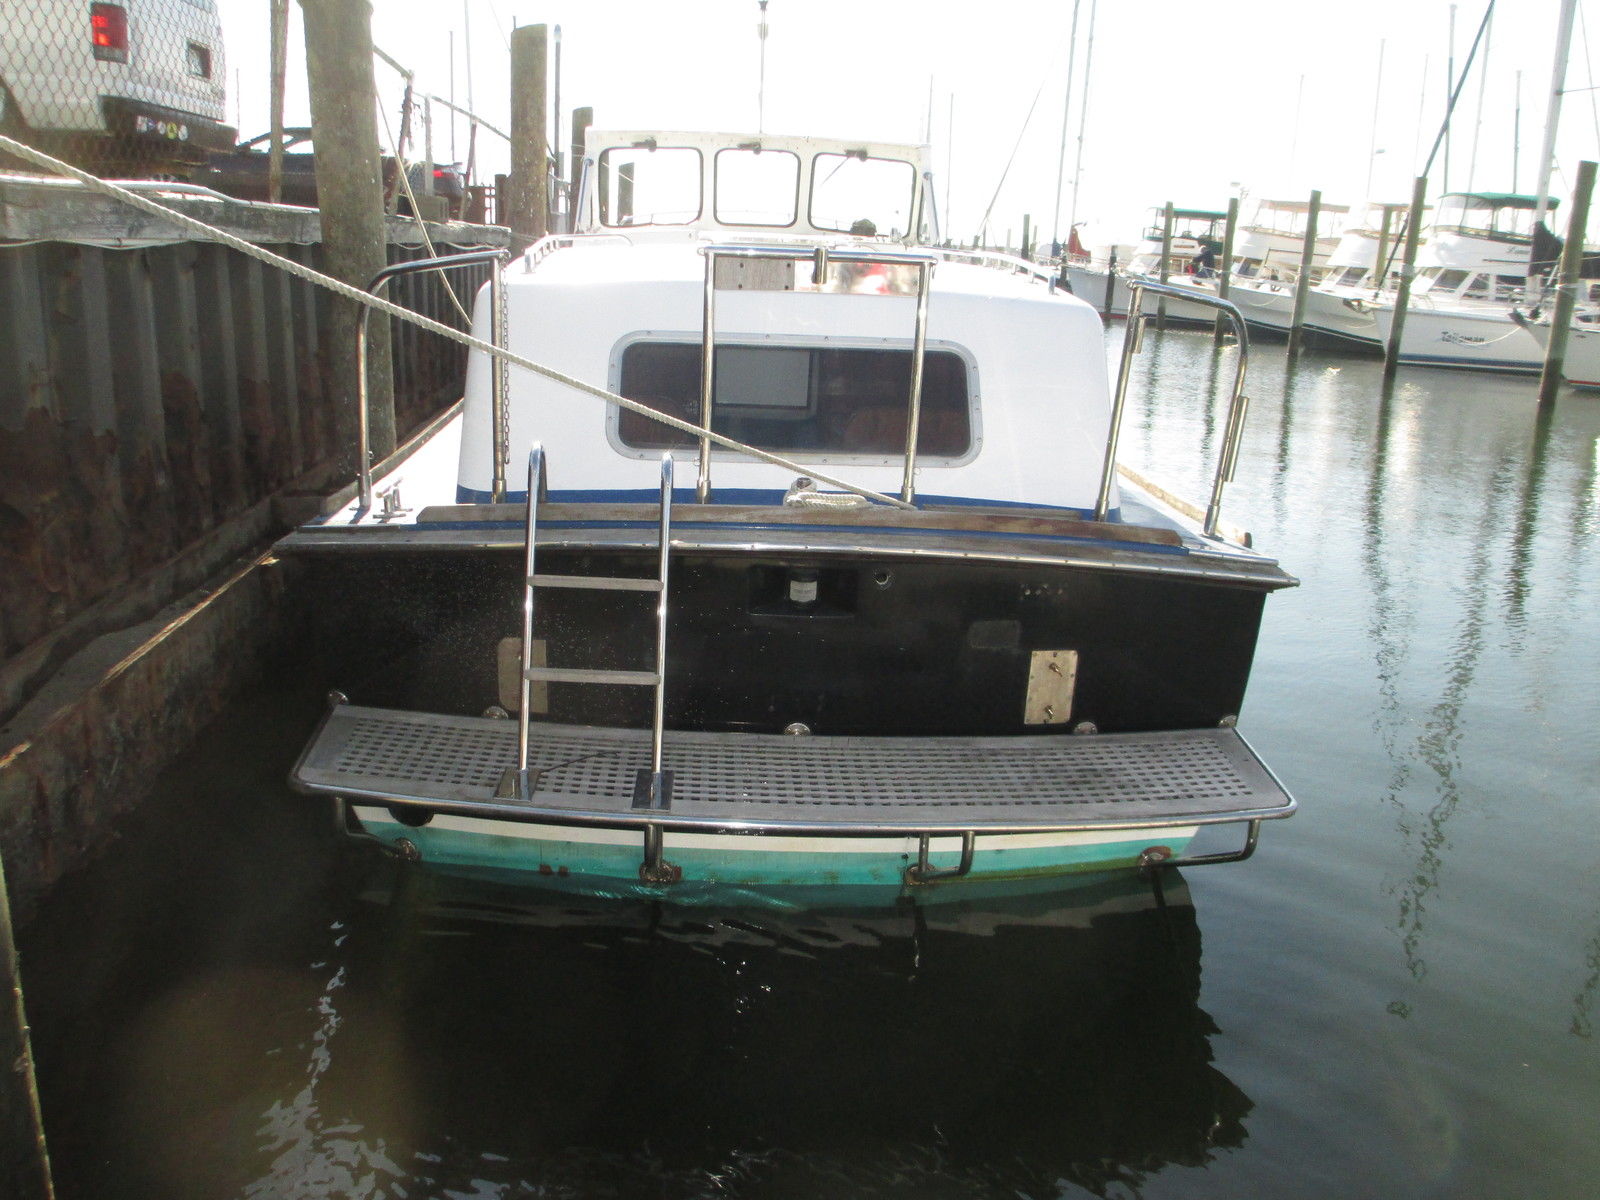 Willard Admirals Barge 1980 for sale for $5,800 - www.waterandnature.org